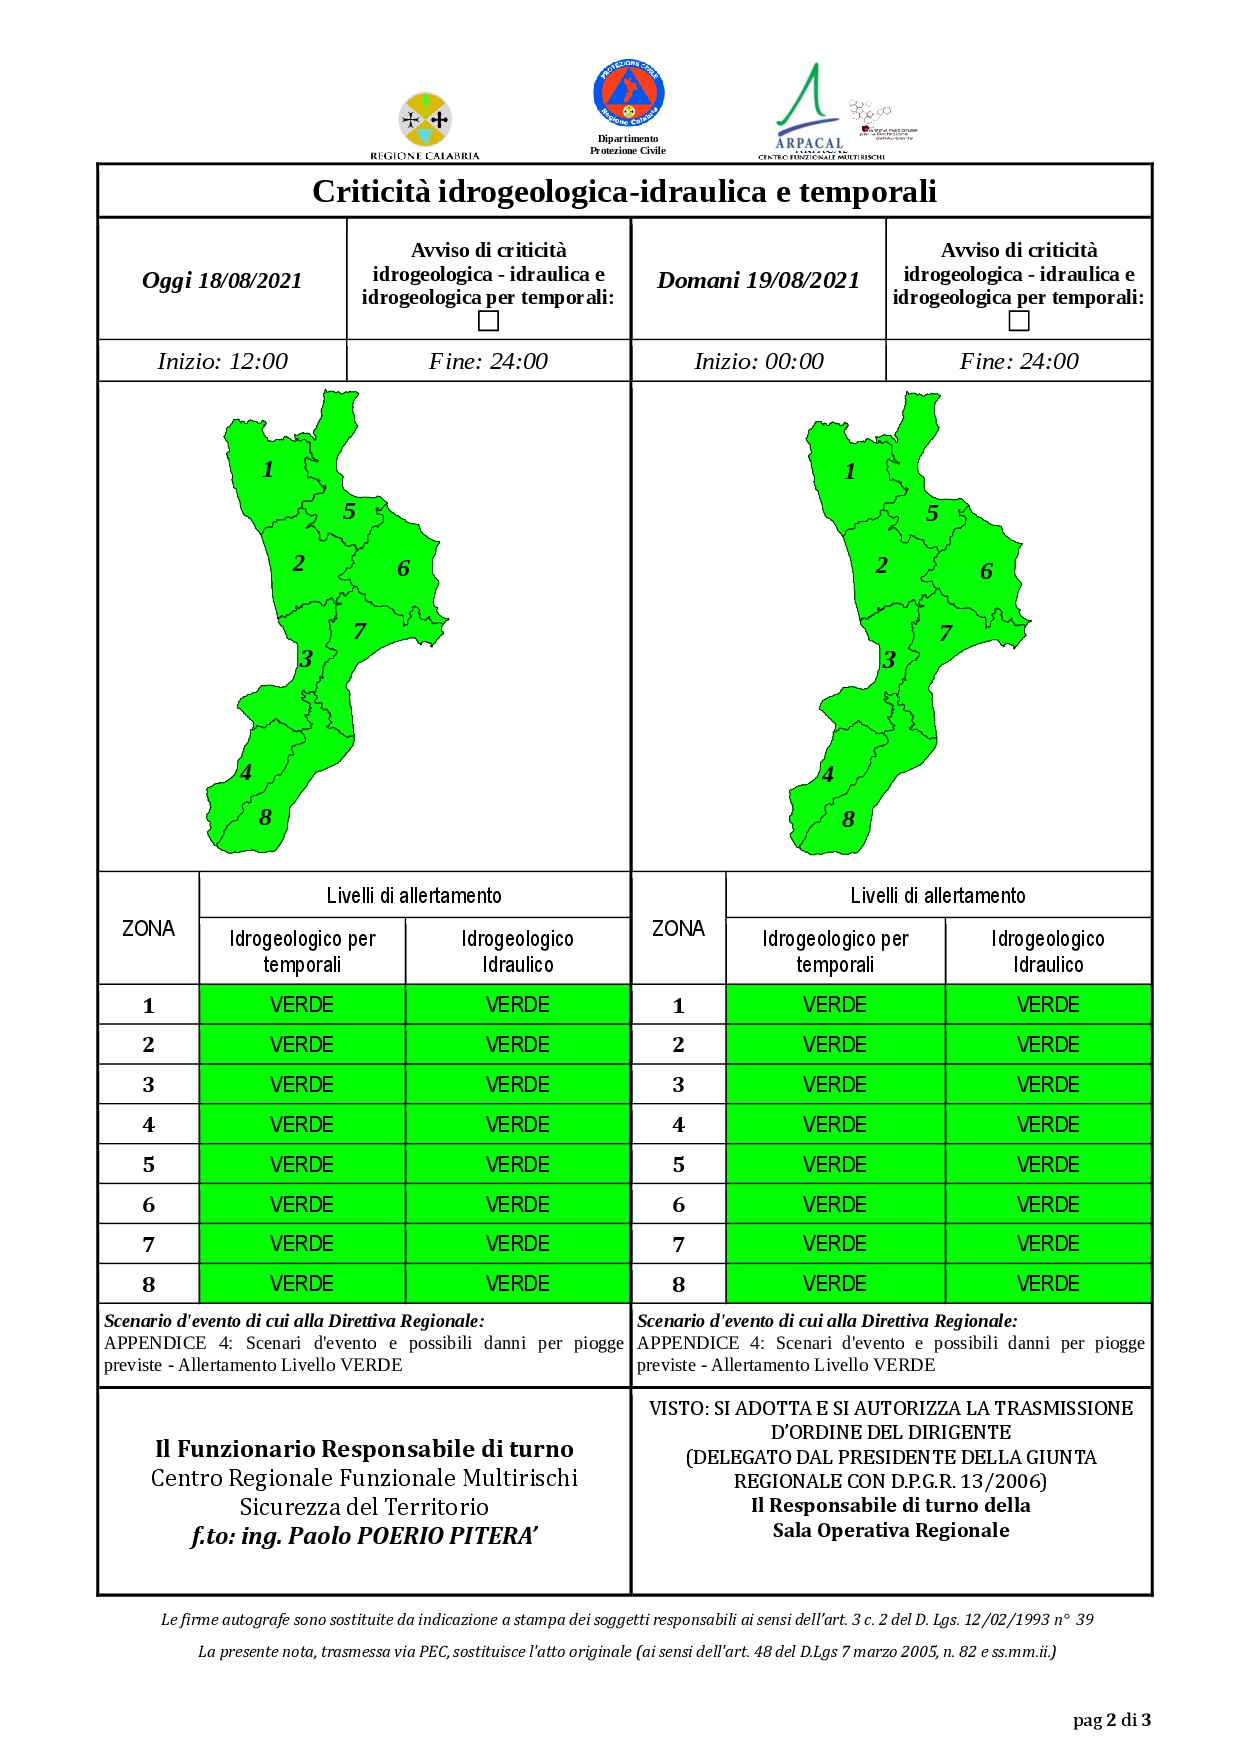 Criticità idrogeologica-idraulica e temporali in Calabria 18-08-2021